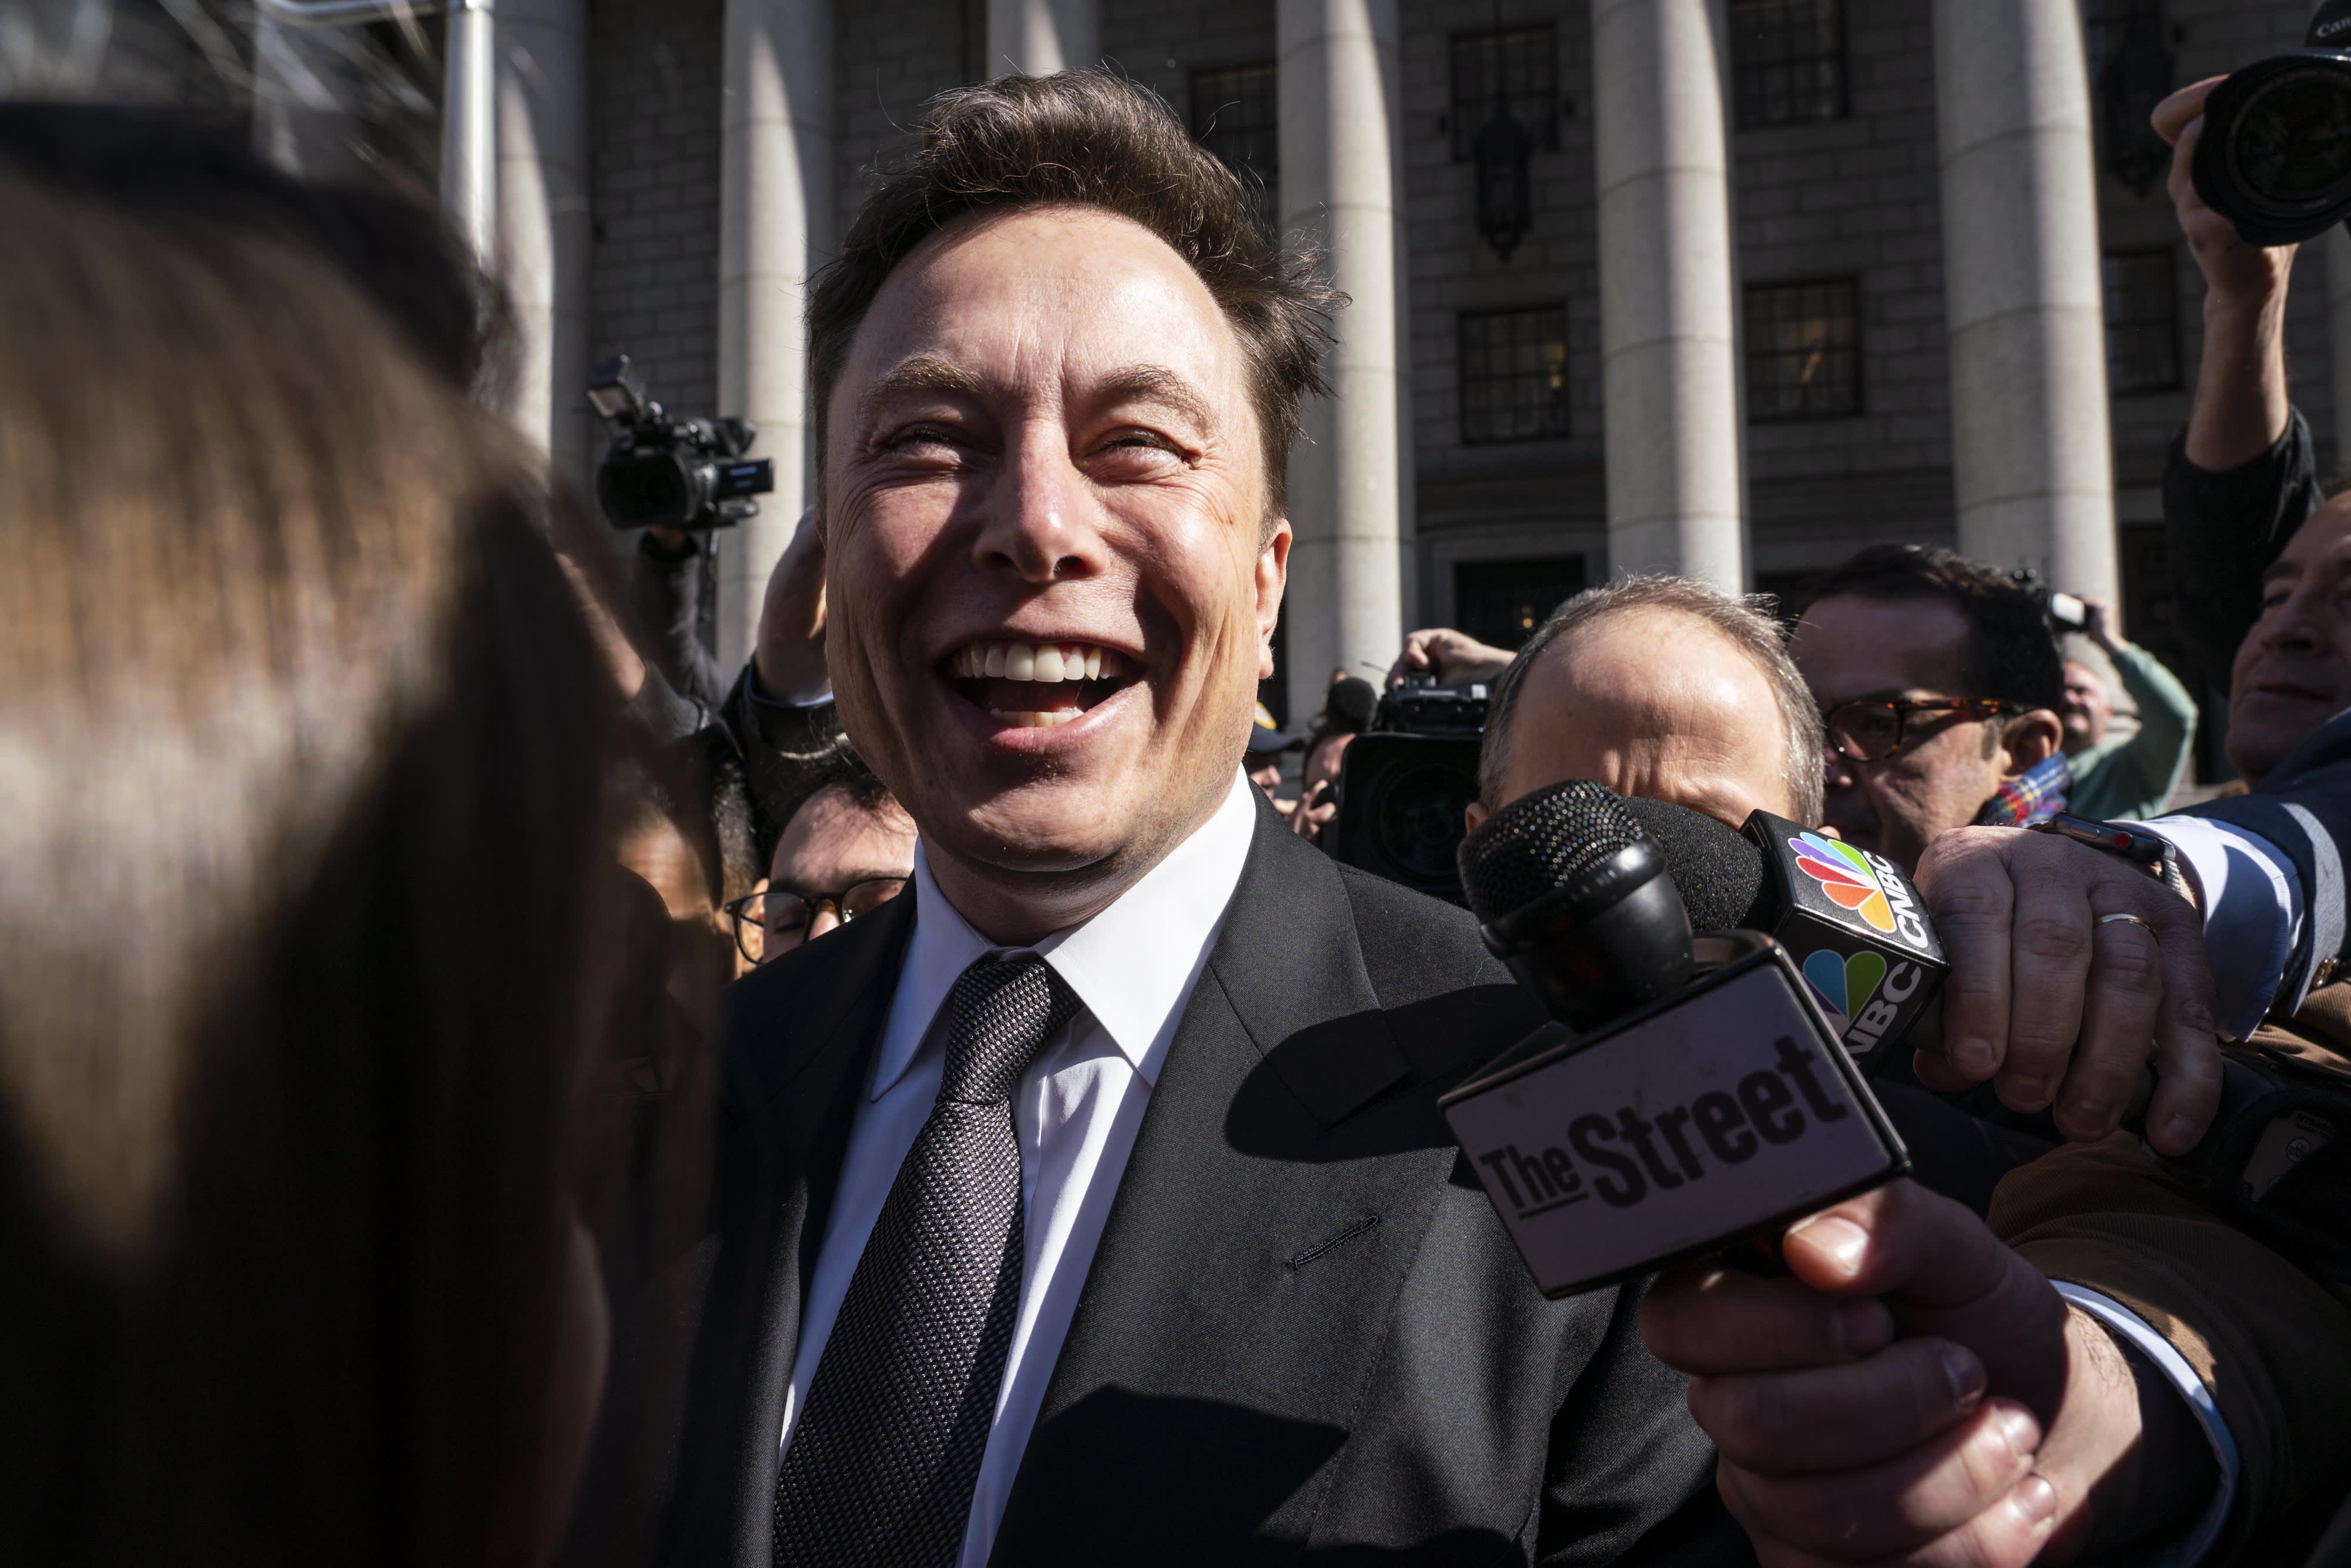 Elon Musk on investor call: Autonomy will make Tesla a $500B company